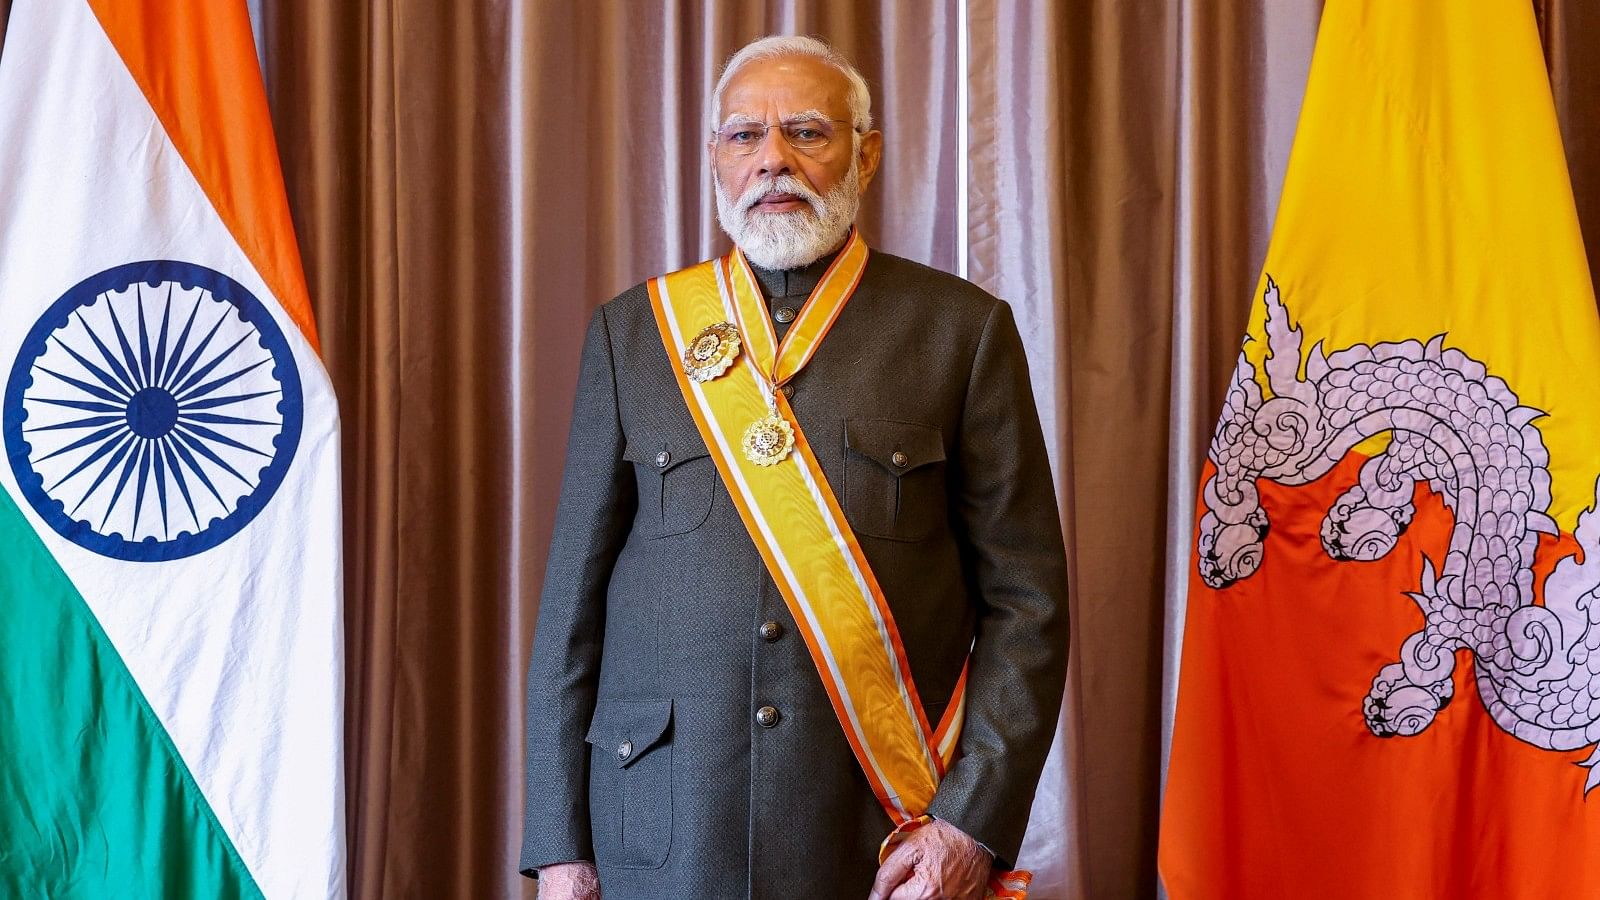 <div class="paragraphs"><p>PM मोदी भूटान के सर्वोच्च नागरिक पुरस्कार 'ऑर्डर ऑफ ड्रूक ग्यालपो' से सम्मानित|Photos</p></div>